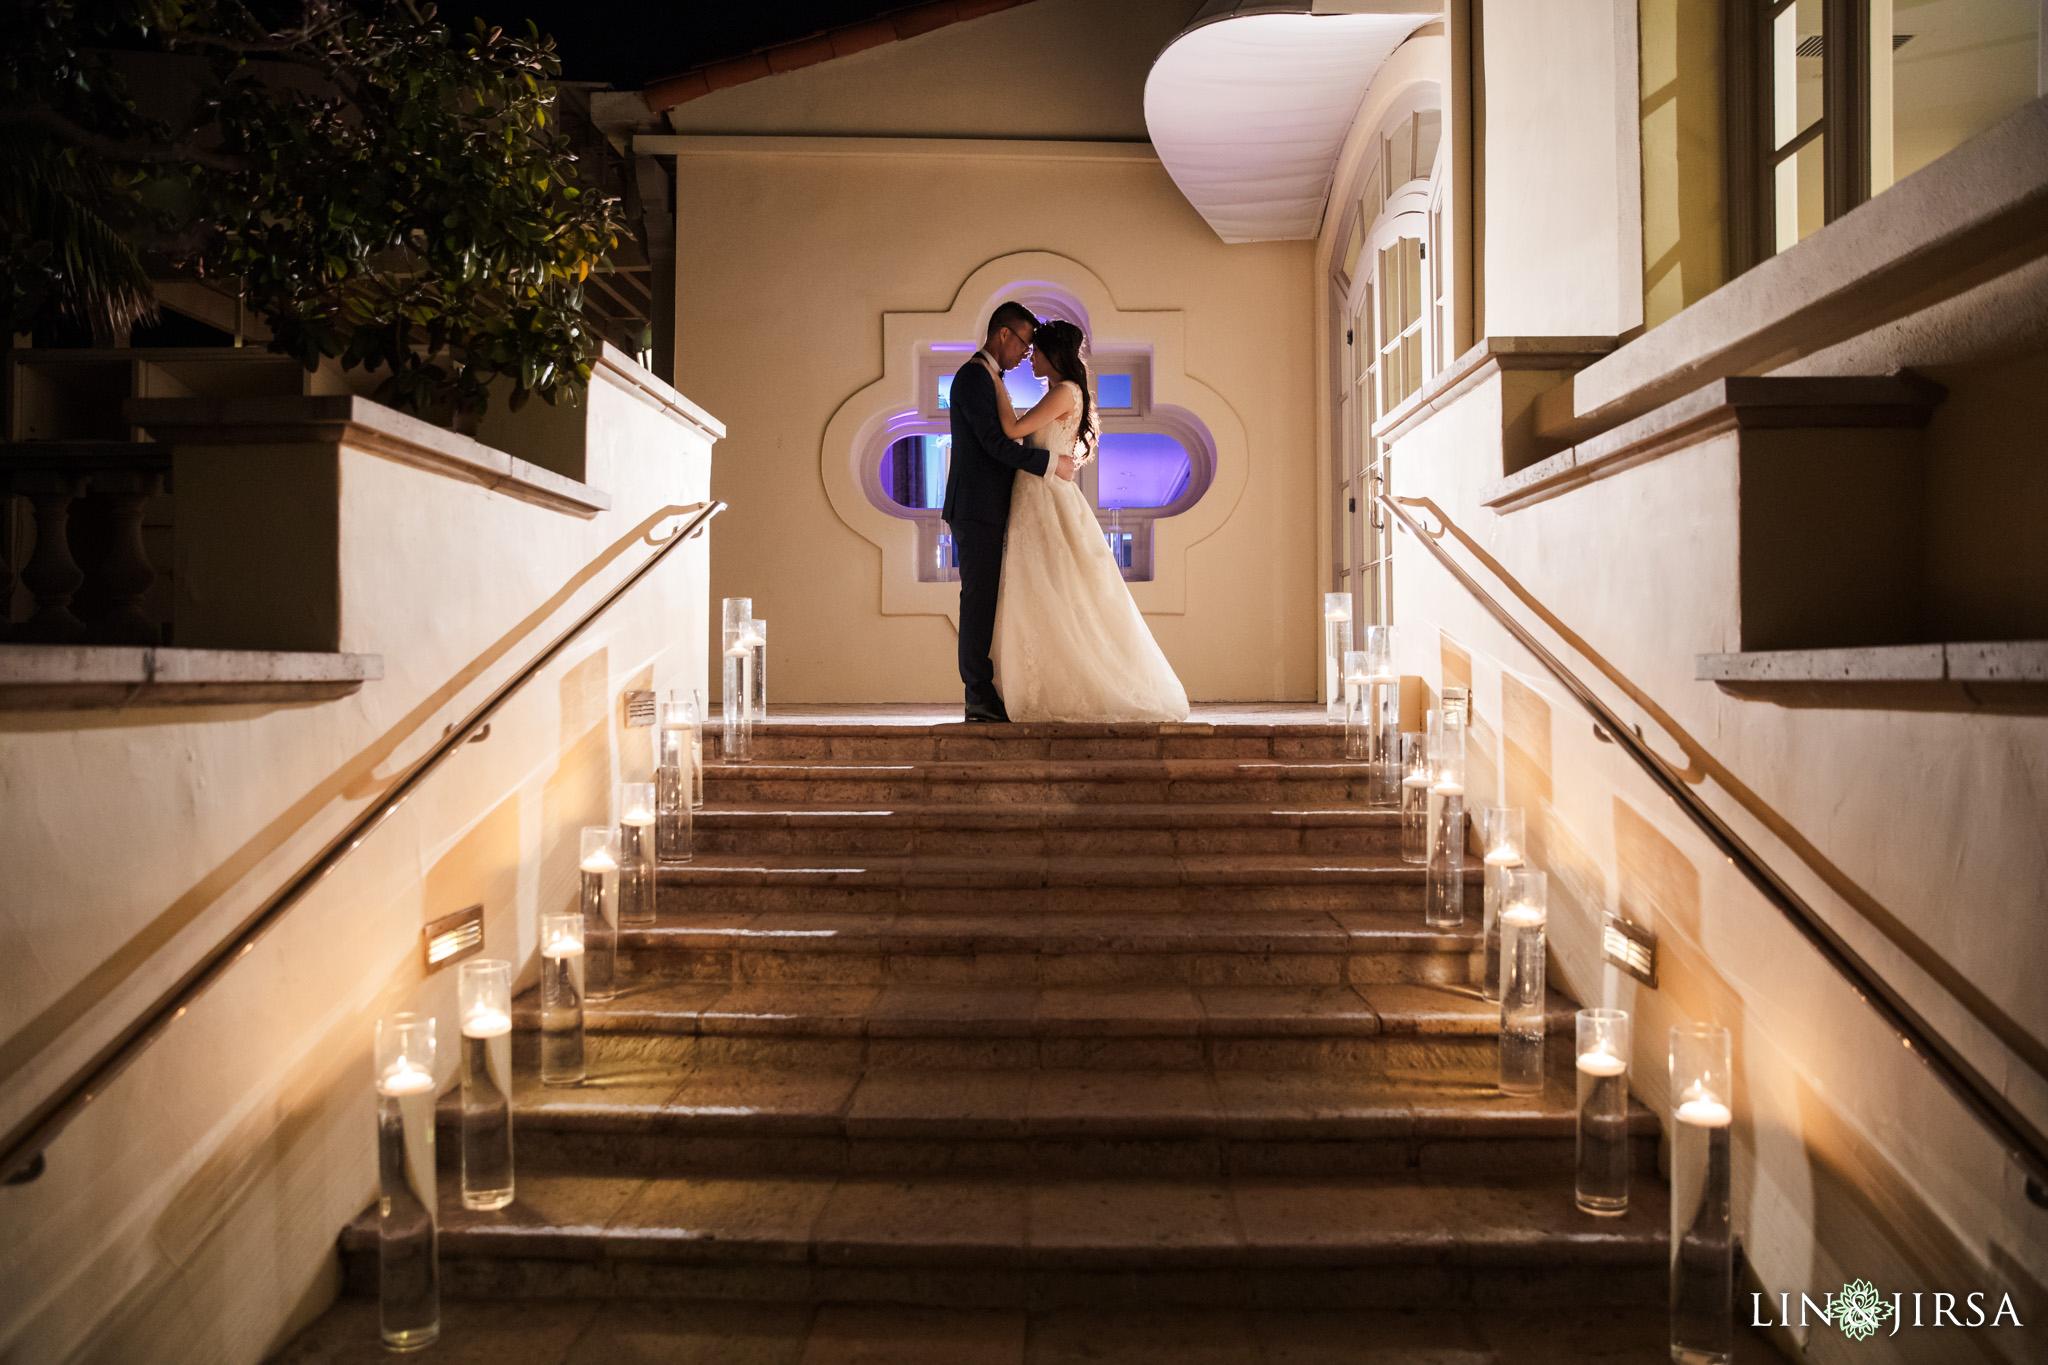 43 Ritz Carlton Laguna Niguel Wedding Photography